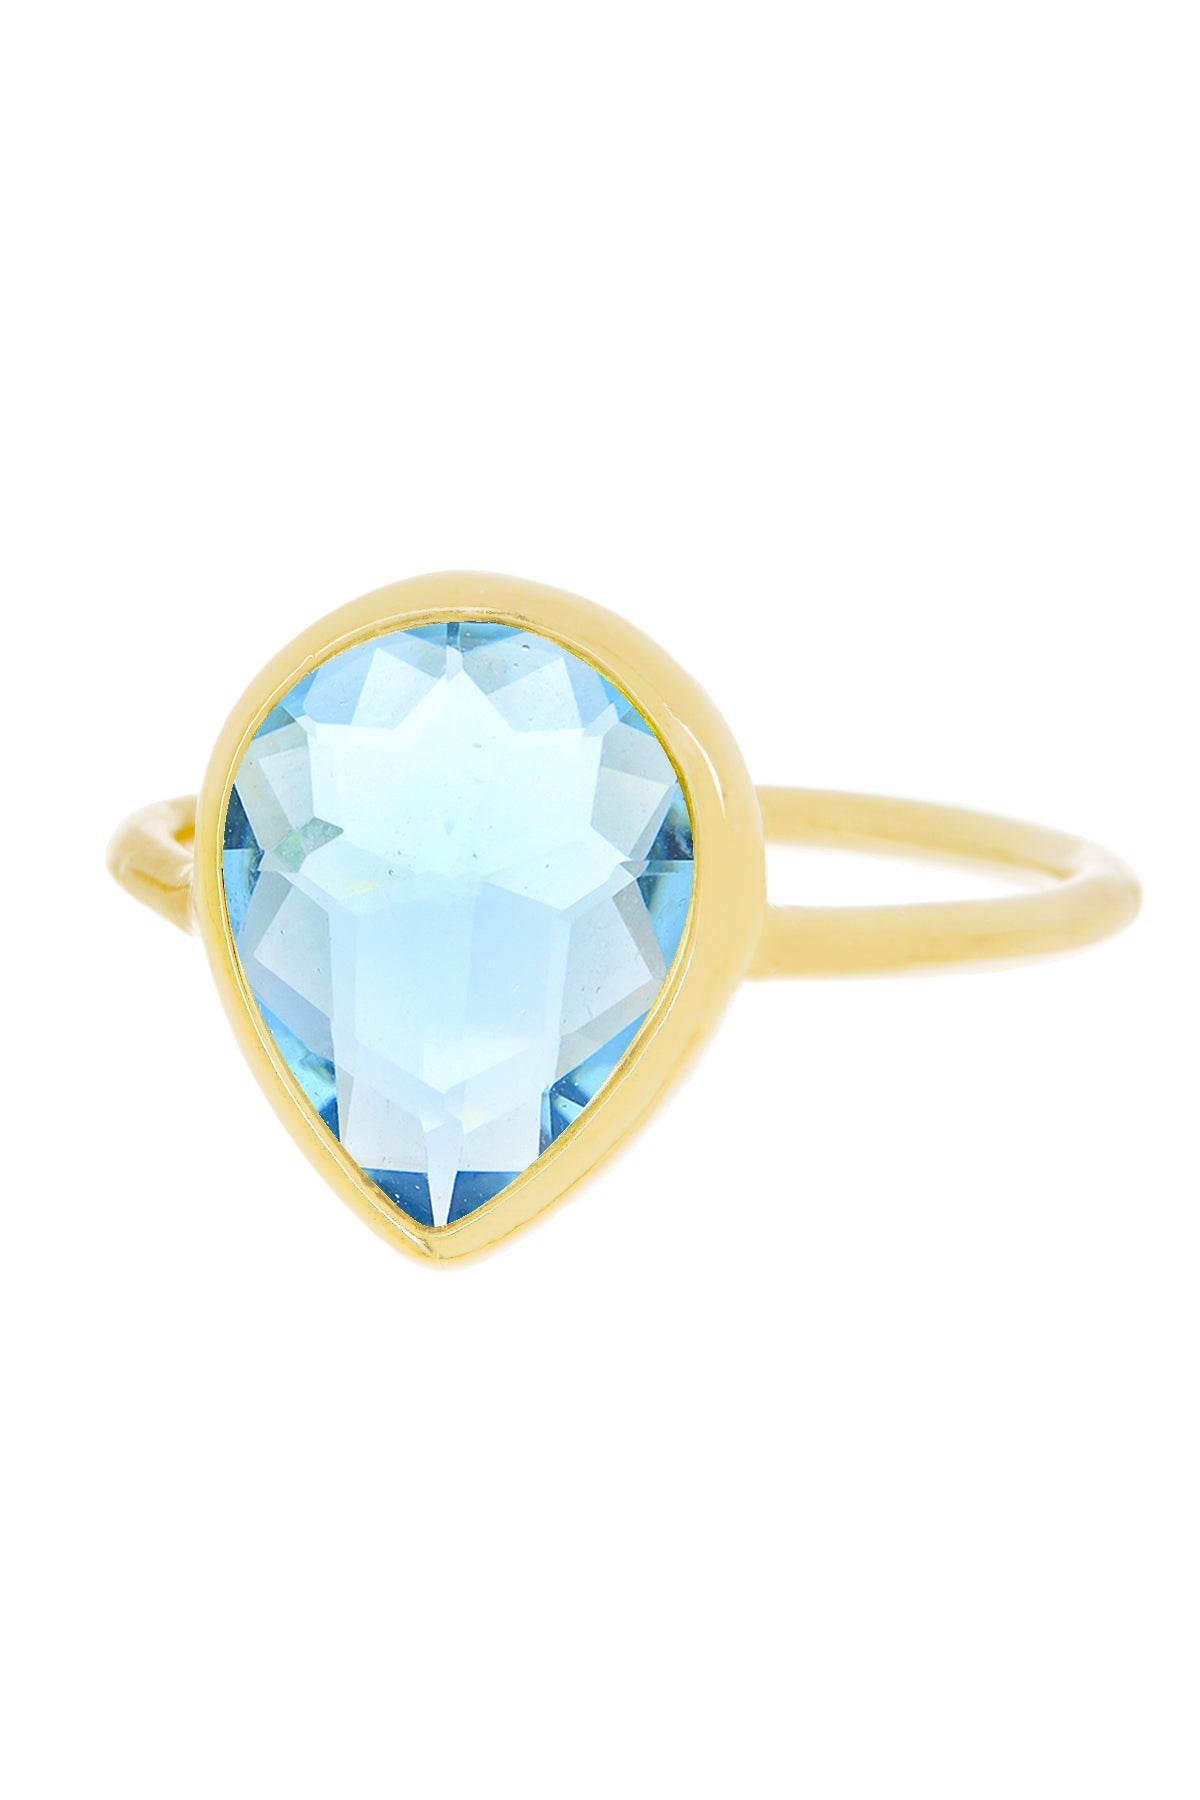 Blue Crystal Teardrop Ring In 14k - GF